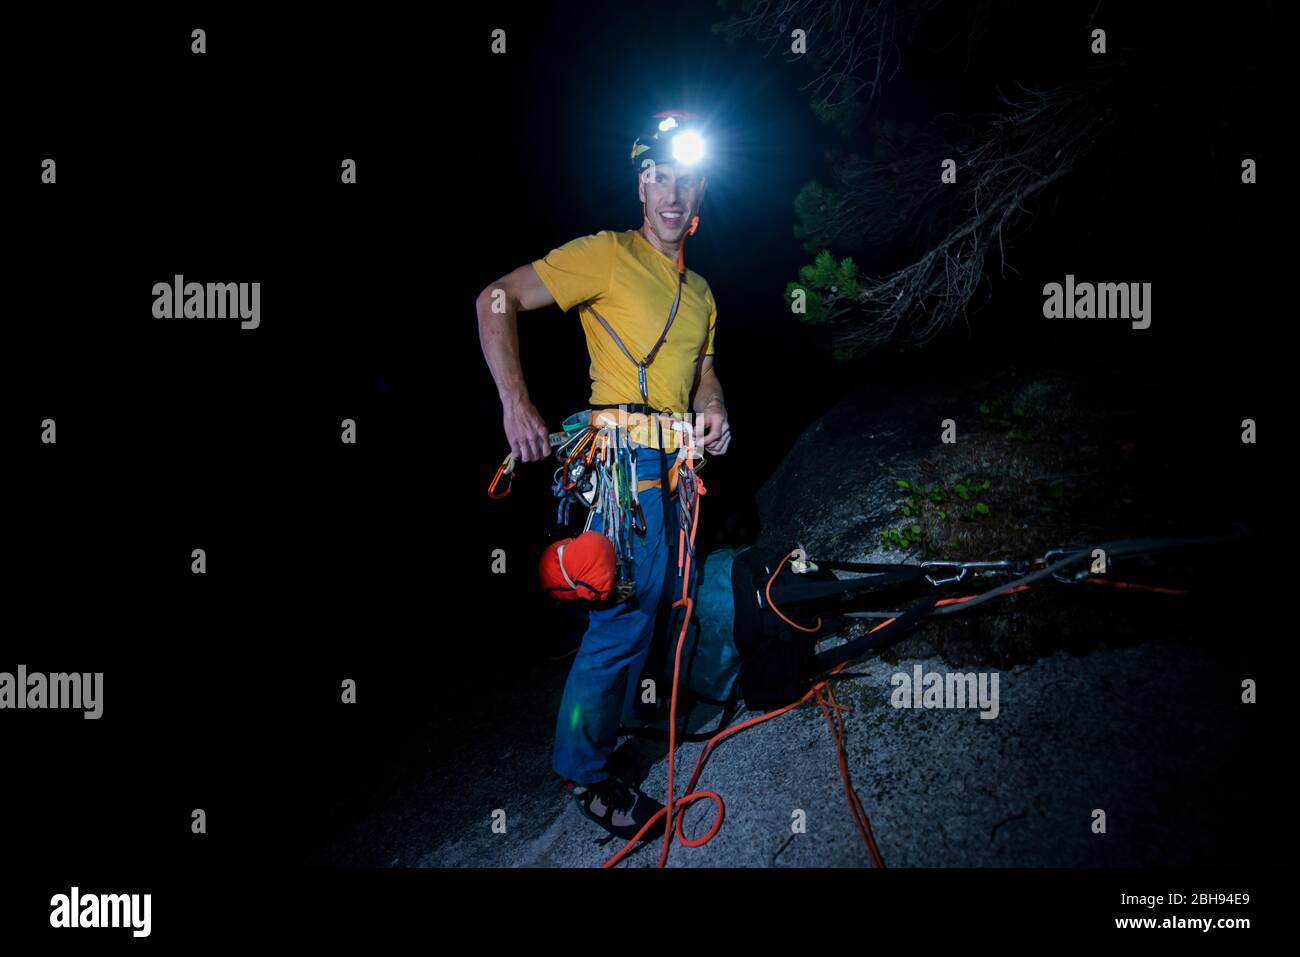 Man finishing rock climbing at night with headlamp top of climb Stock Photo